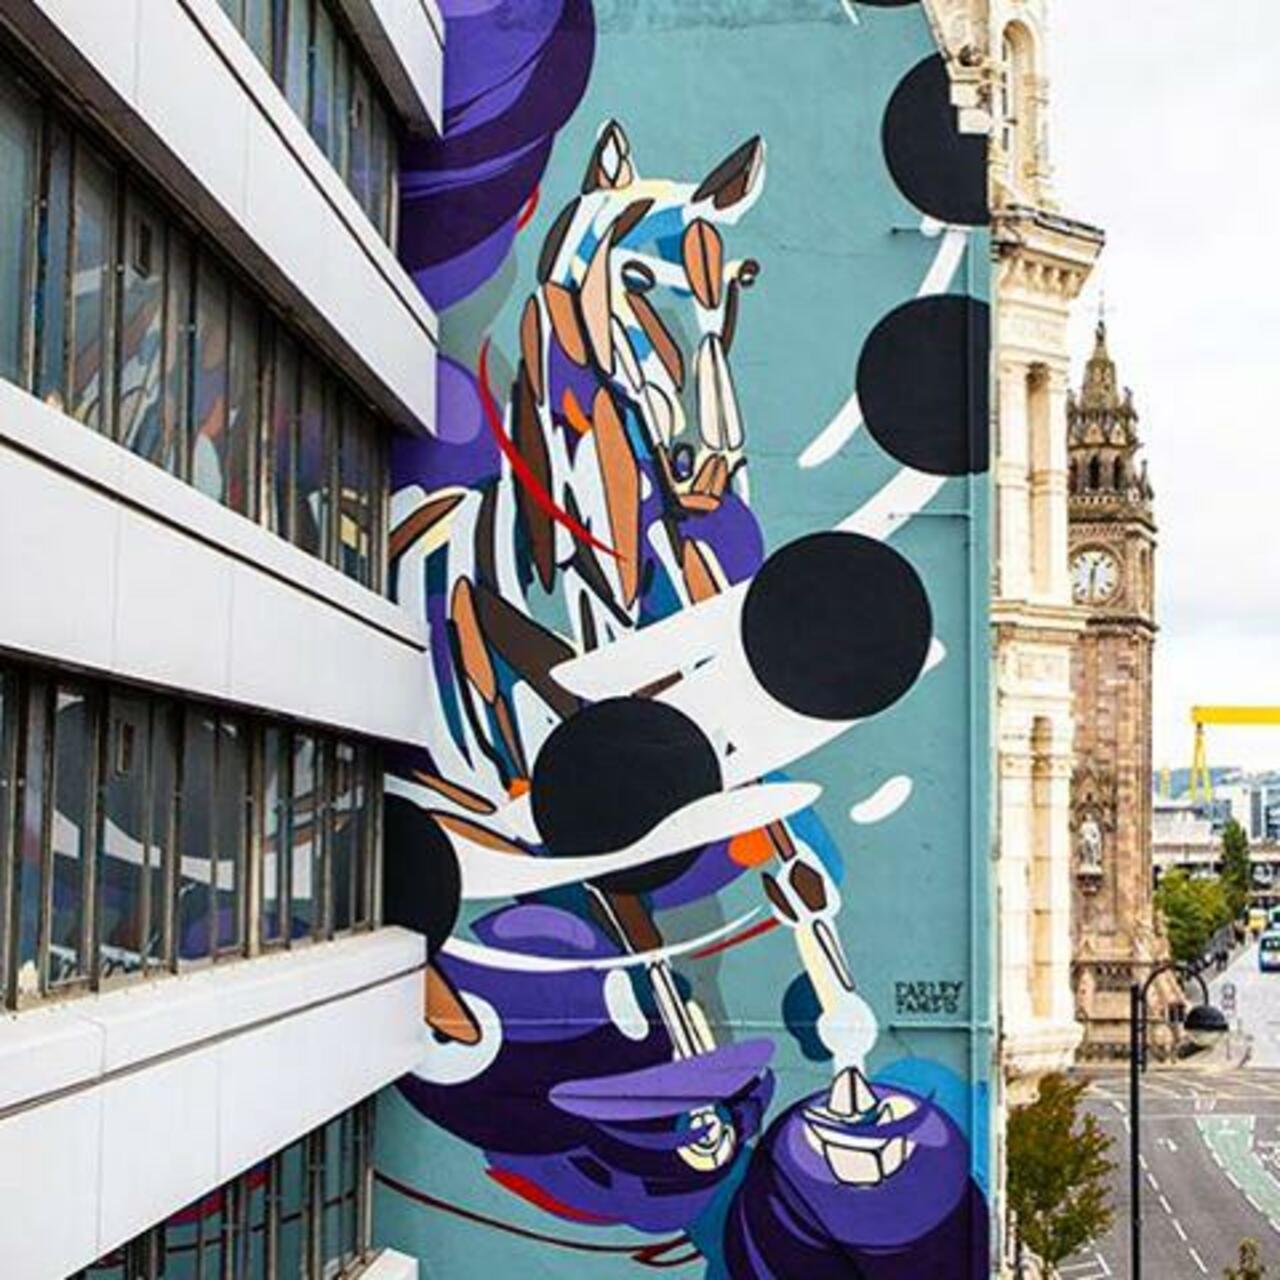 James Earley paints something new in Dublin, Ireland. #StreetArt #Graffiti #Mural http://t.co/k5k0WWAphX